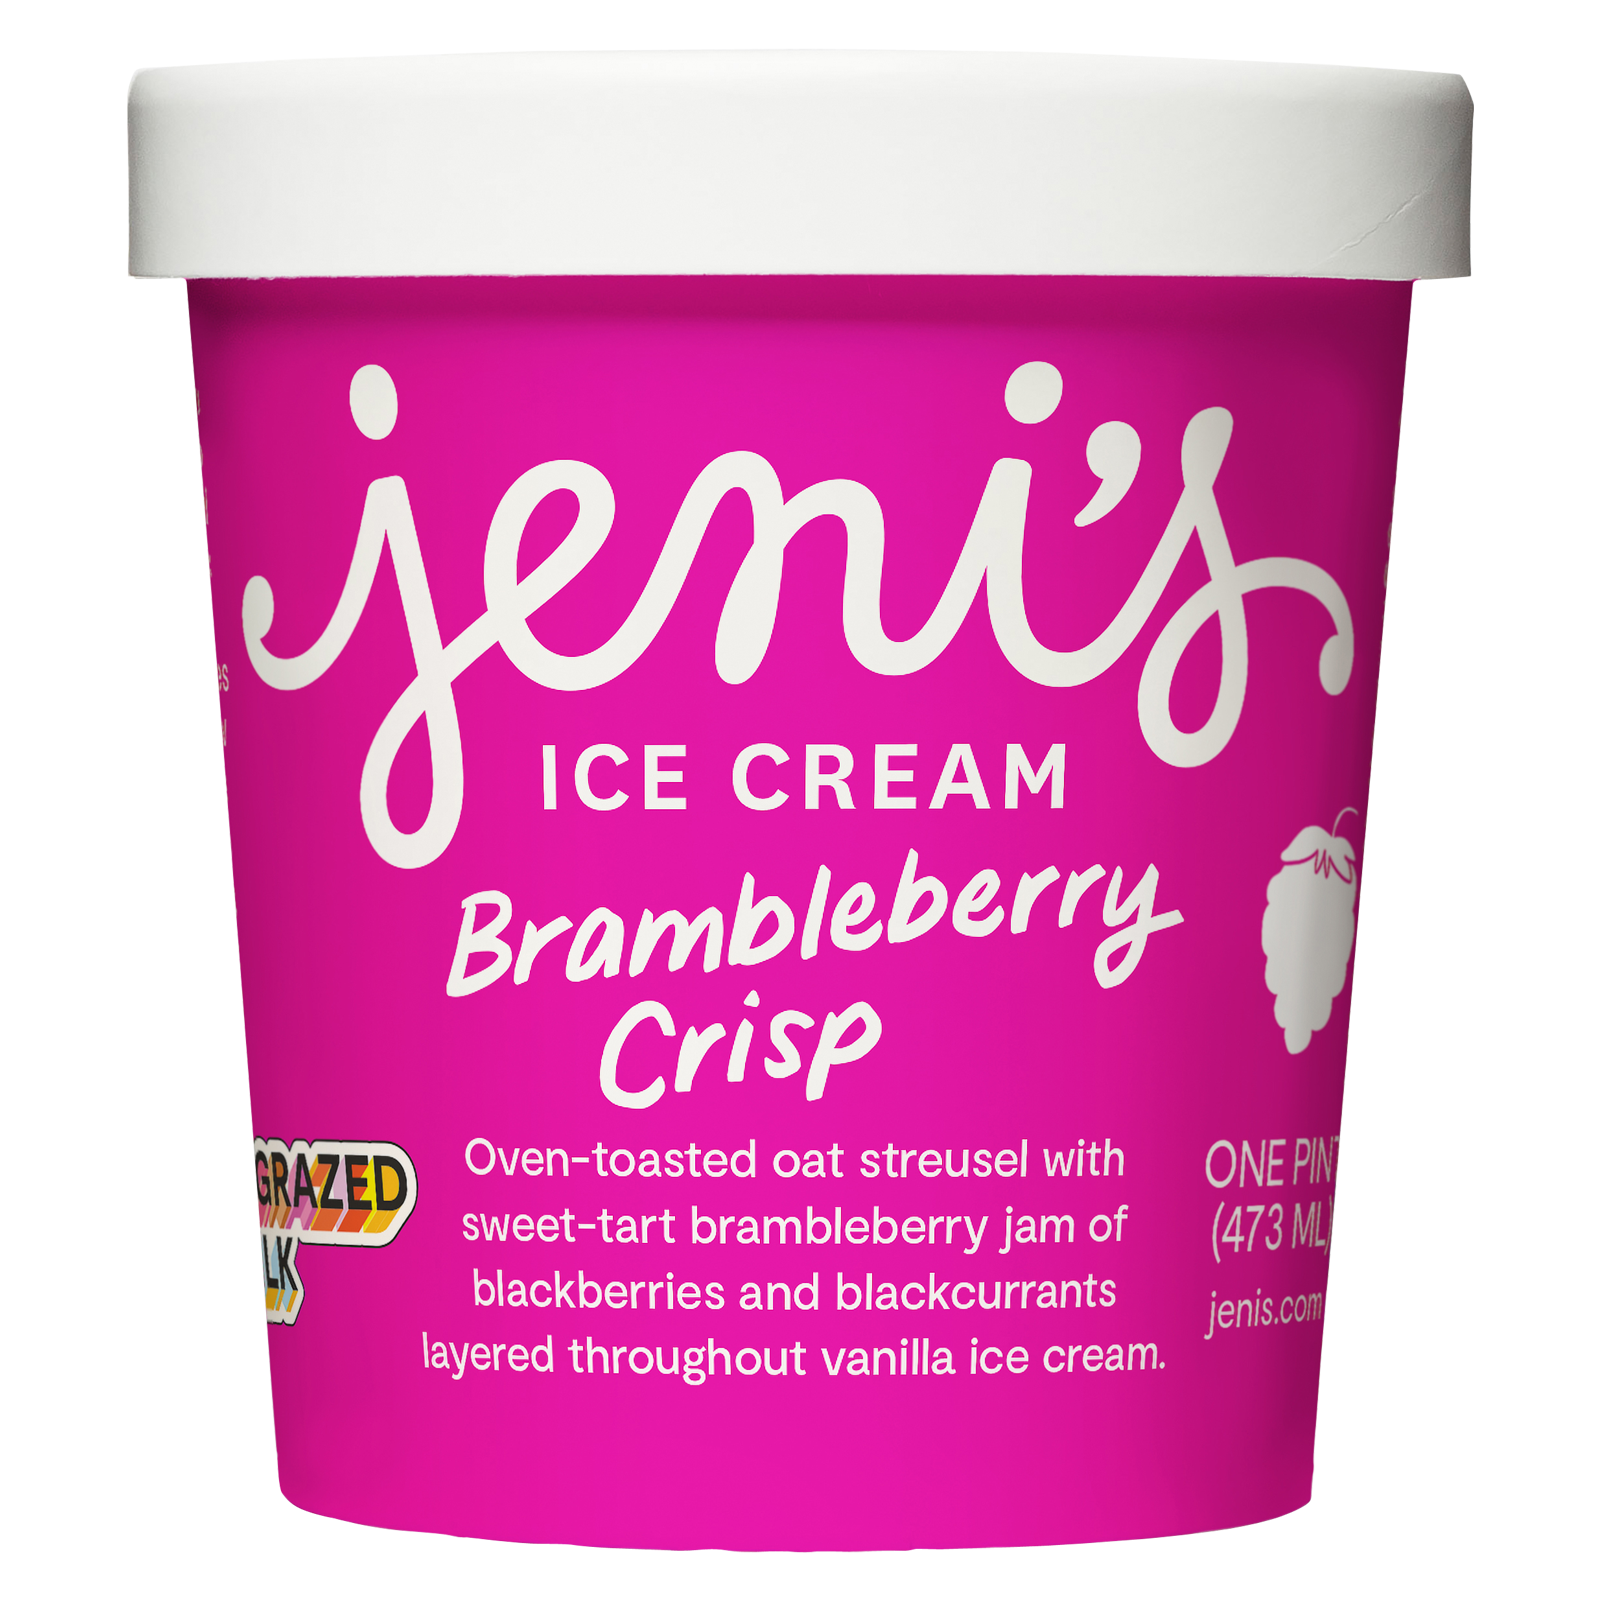 Jeni's Brambleberry Crisp Ice Cream Pint